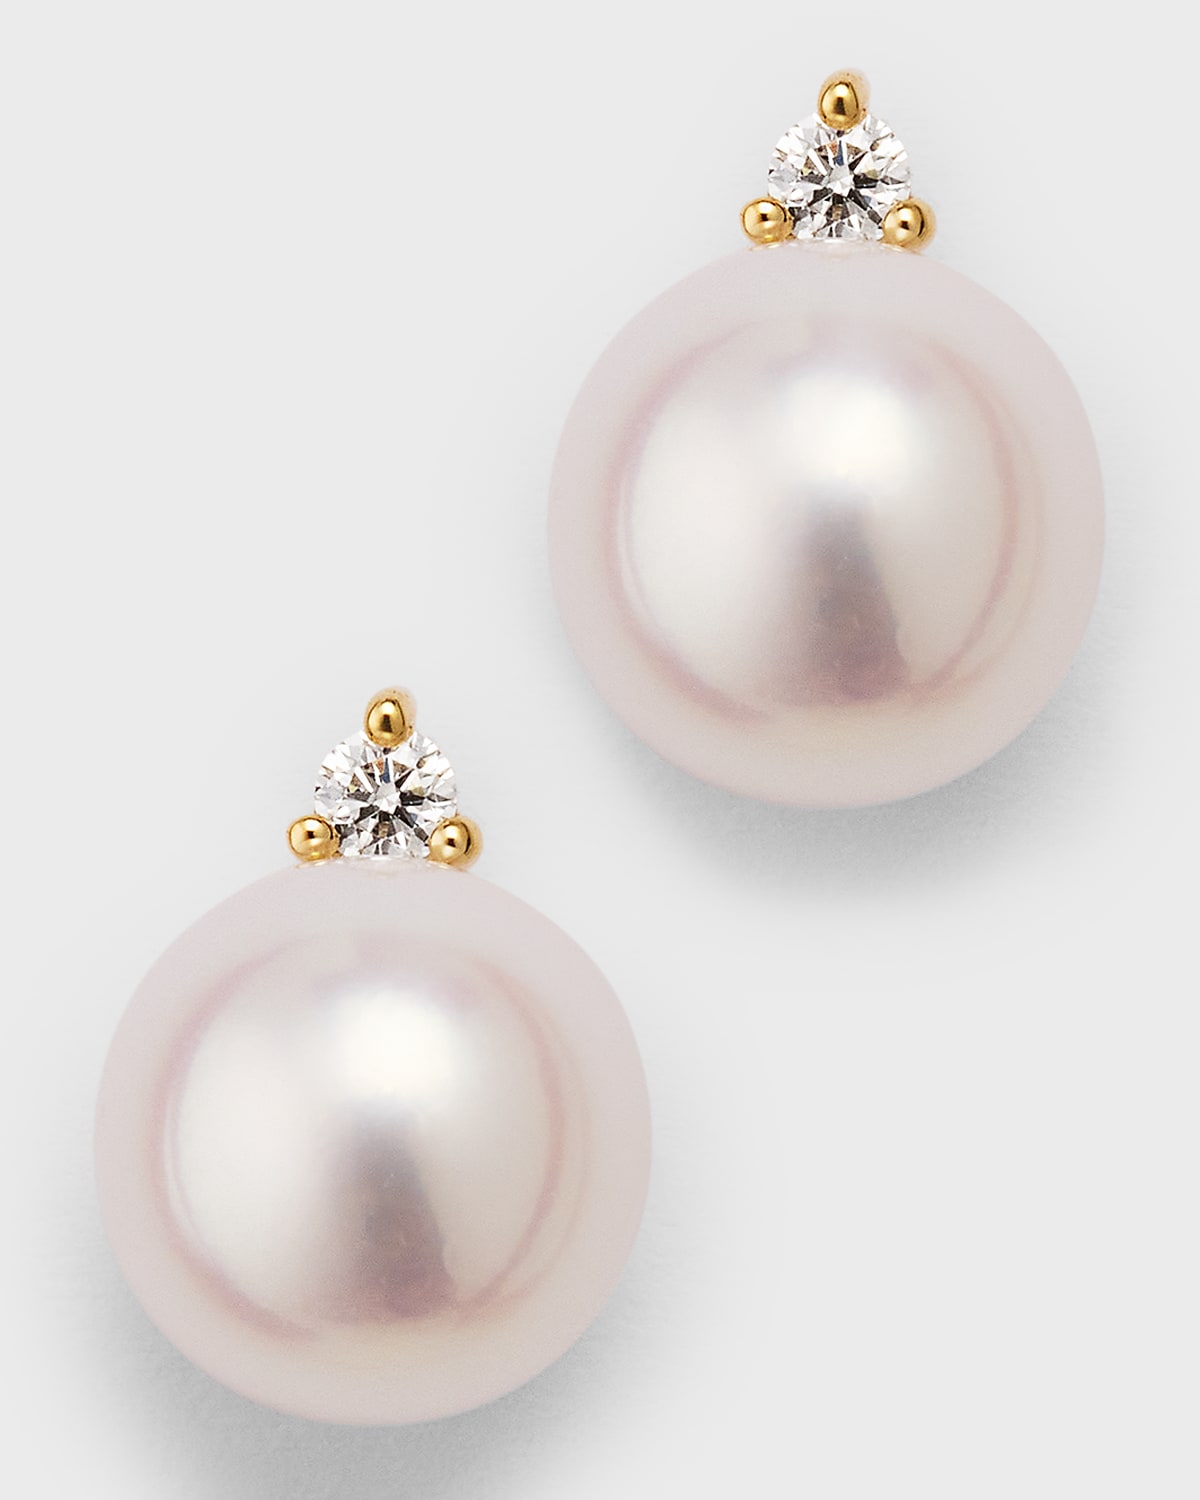 14k Gold Pearl and Diamond Stud Earrings